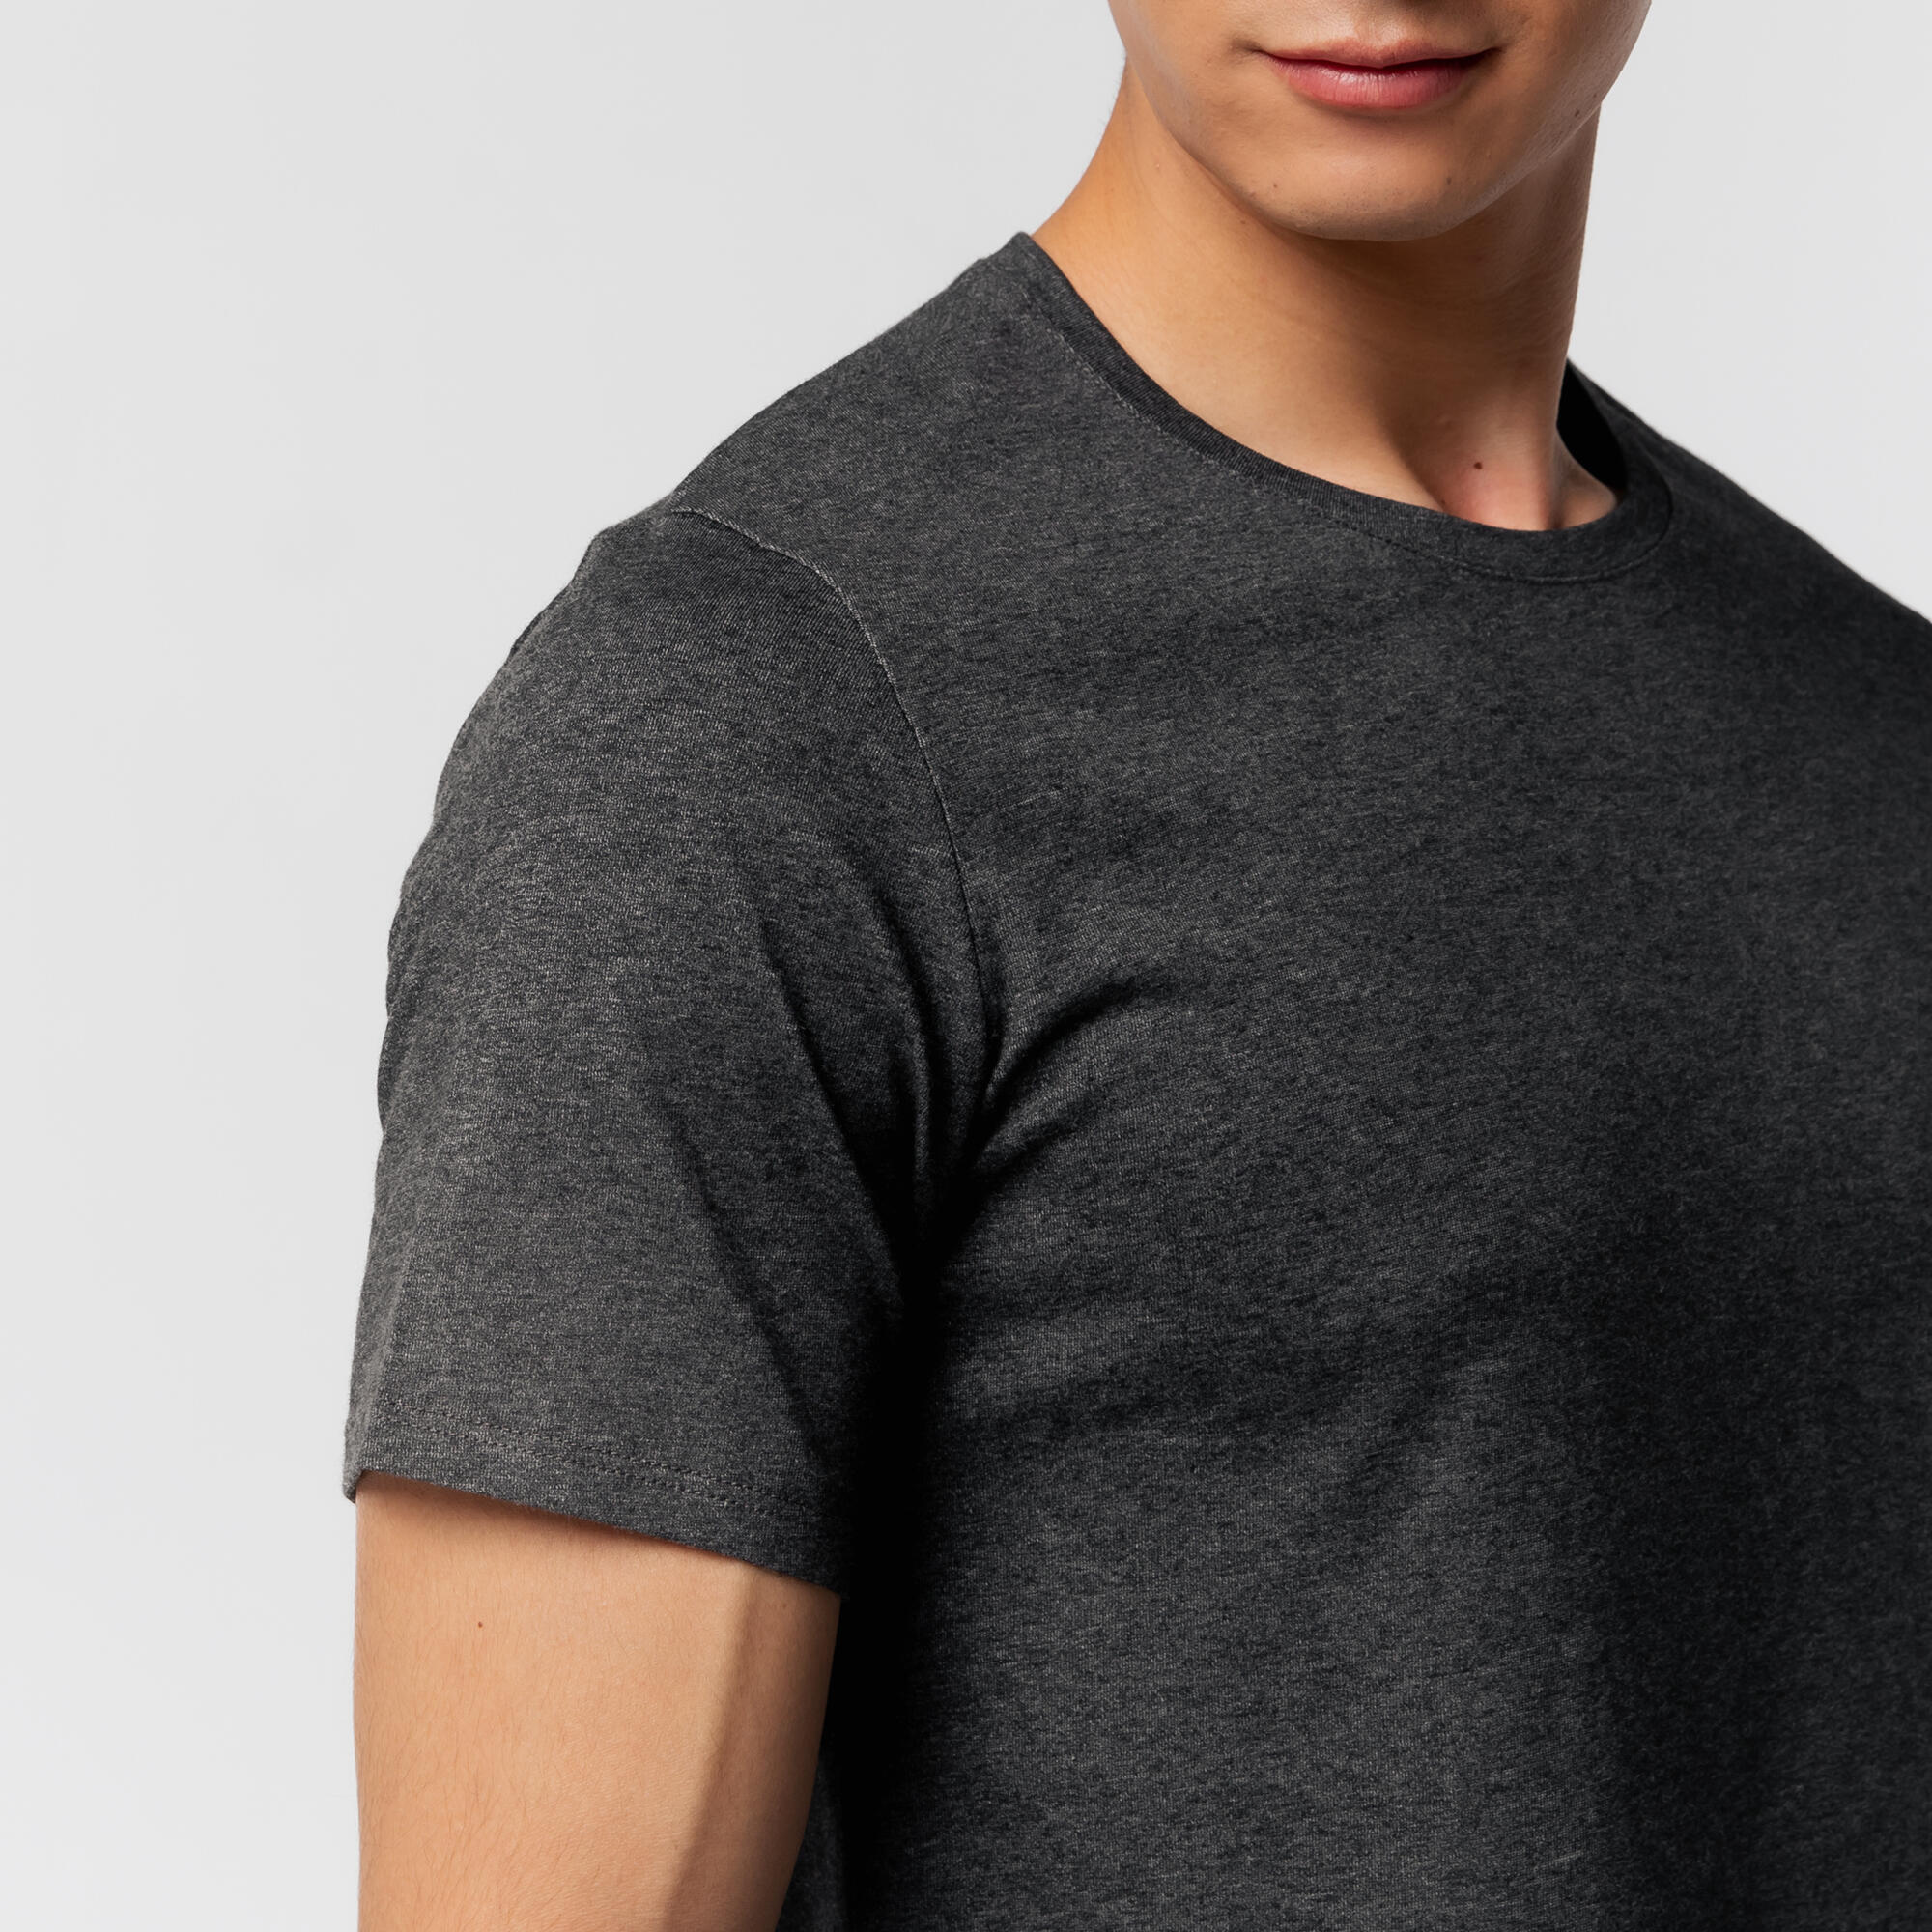 Men's Short-Sleeved Straight-Cut Crew Neck Cotton Fitness T-Shirt 500 - Grey 9/21